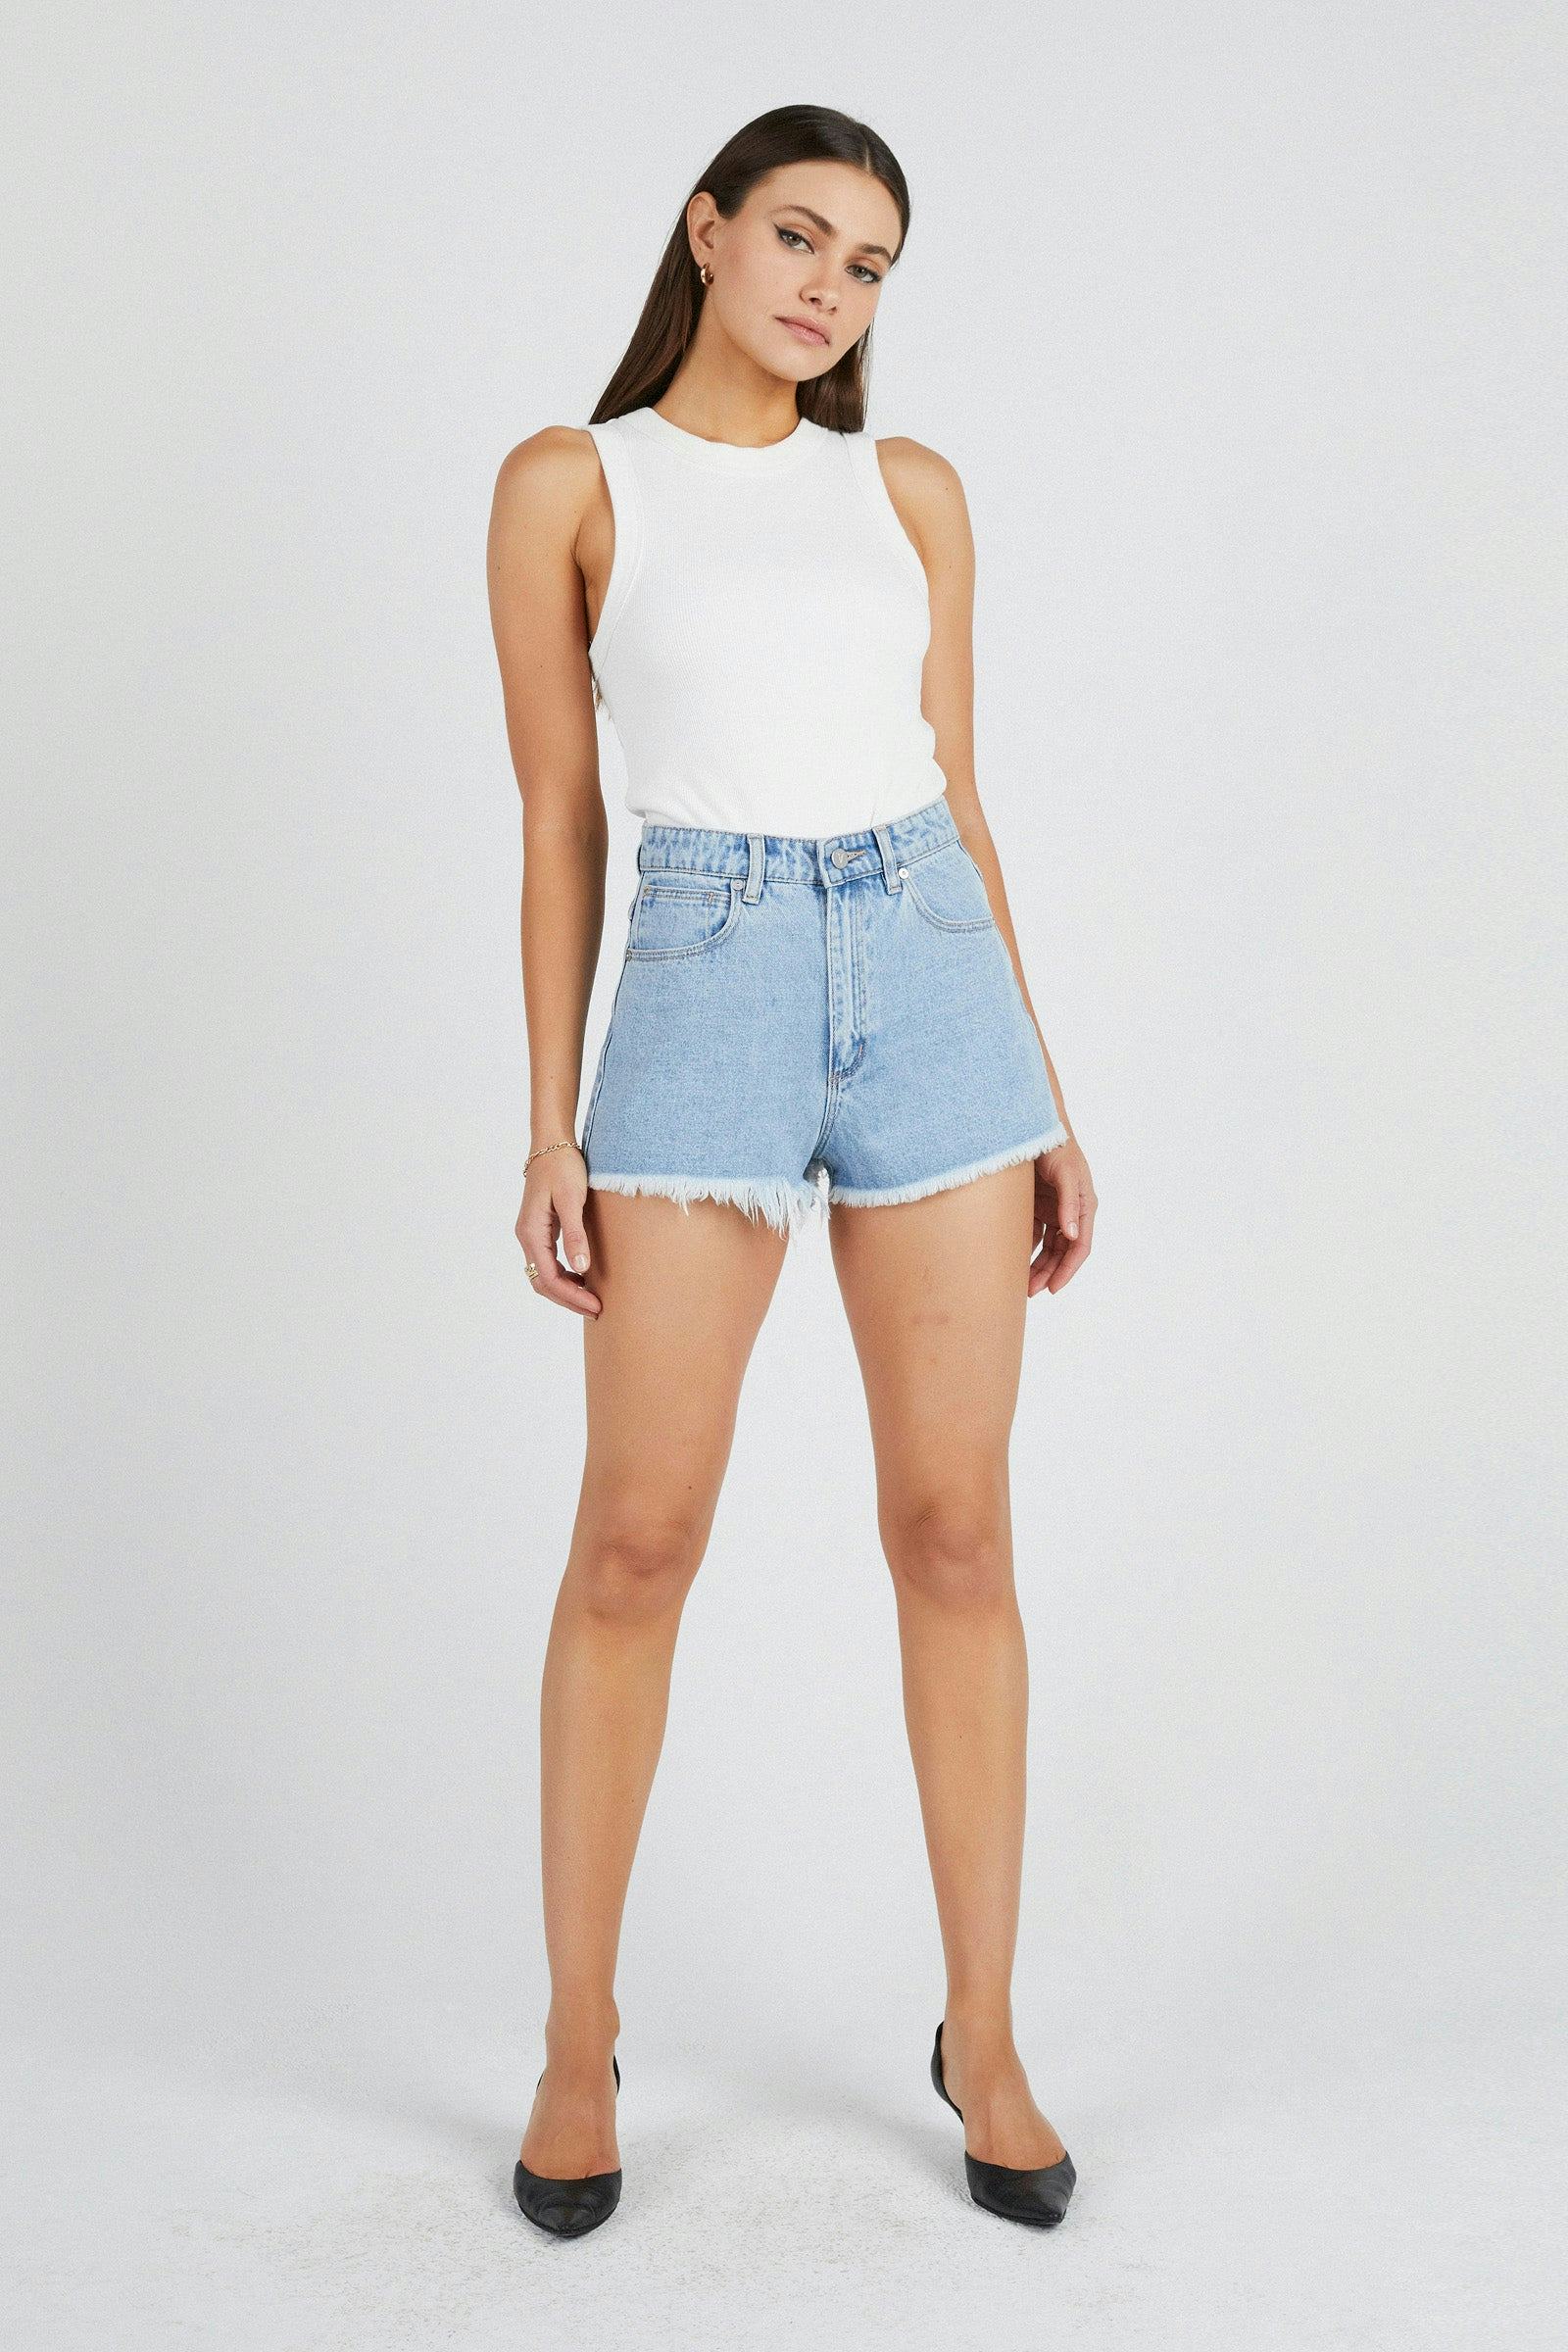 Buy Women's Denim Shorts Online Australia